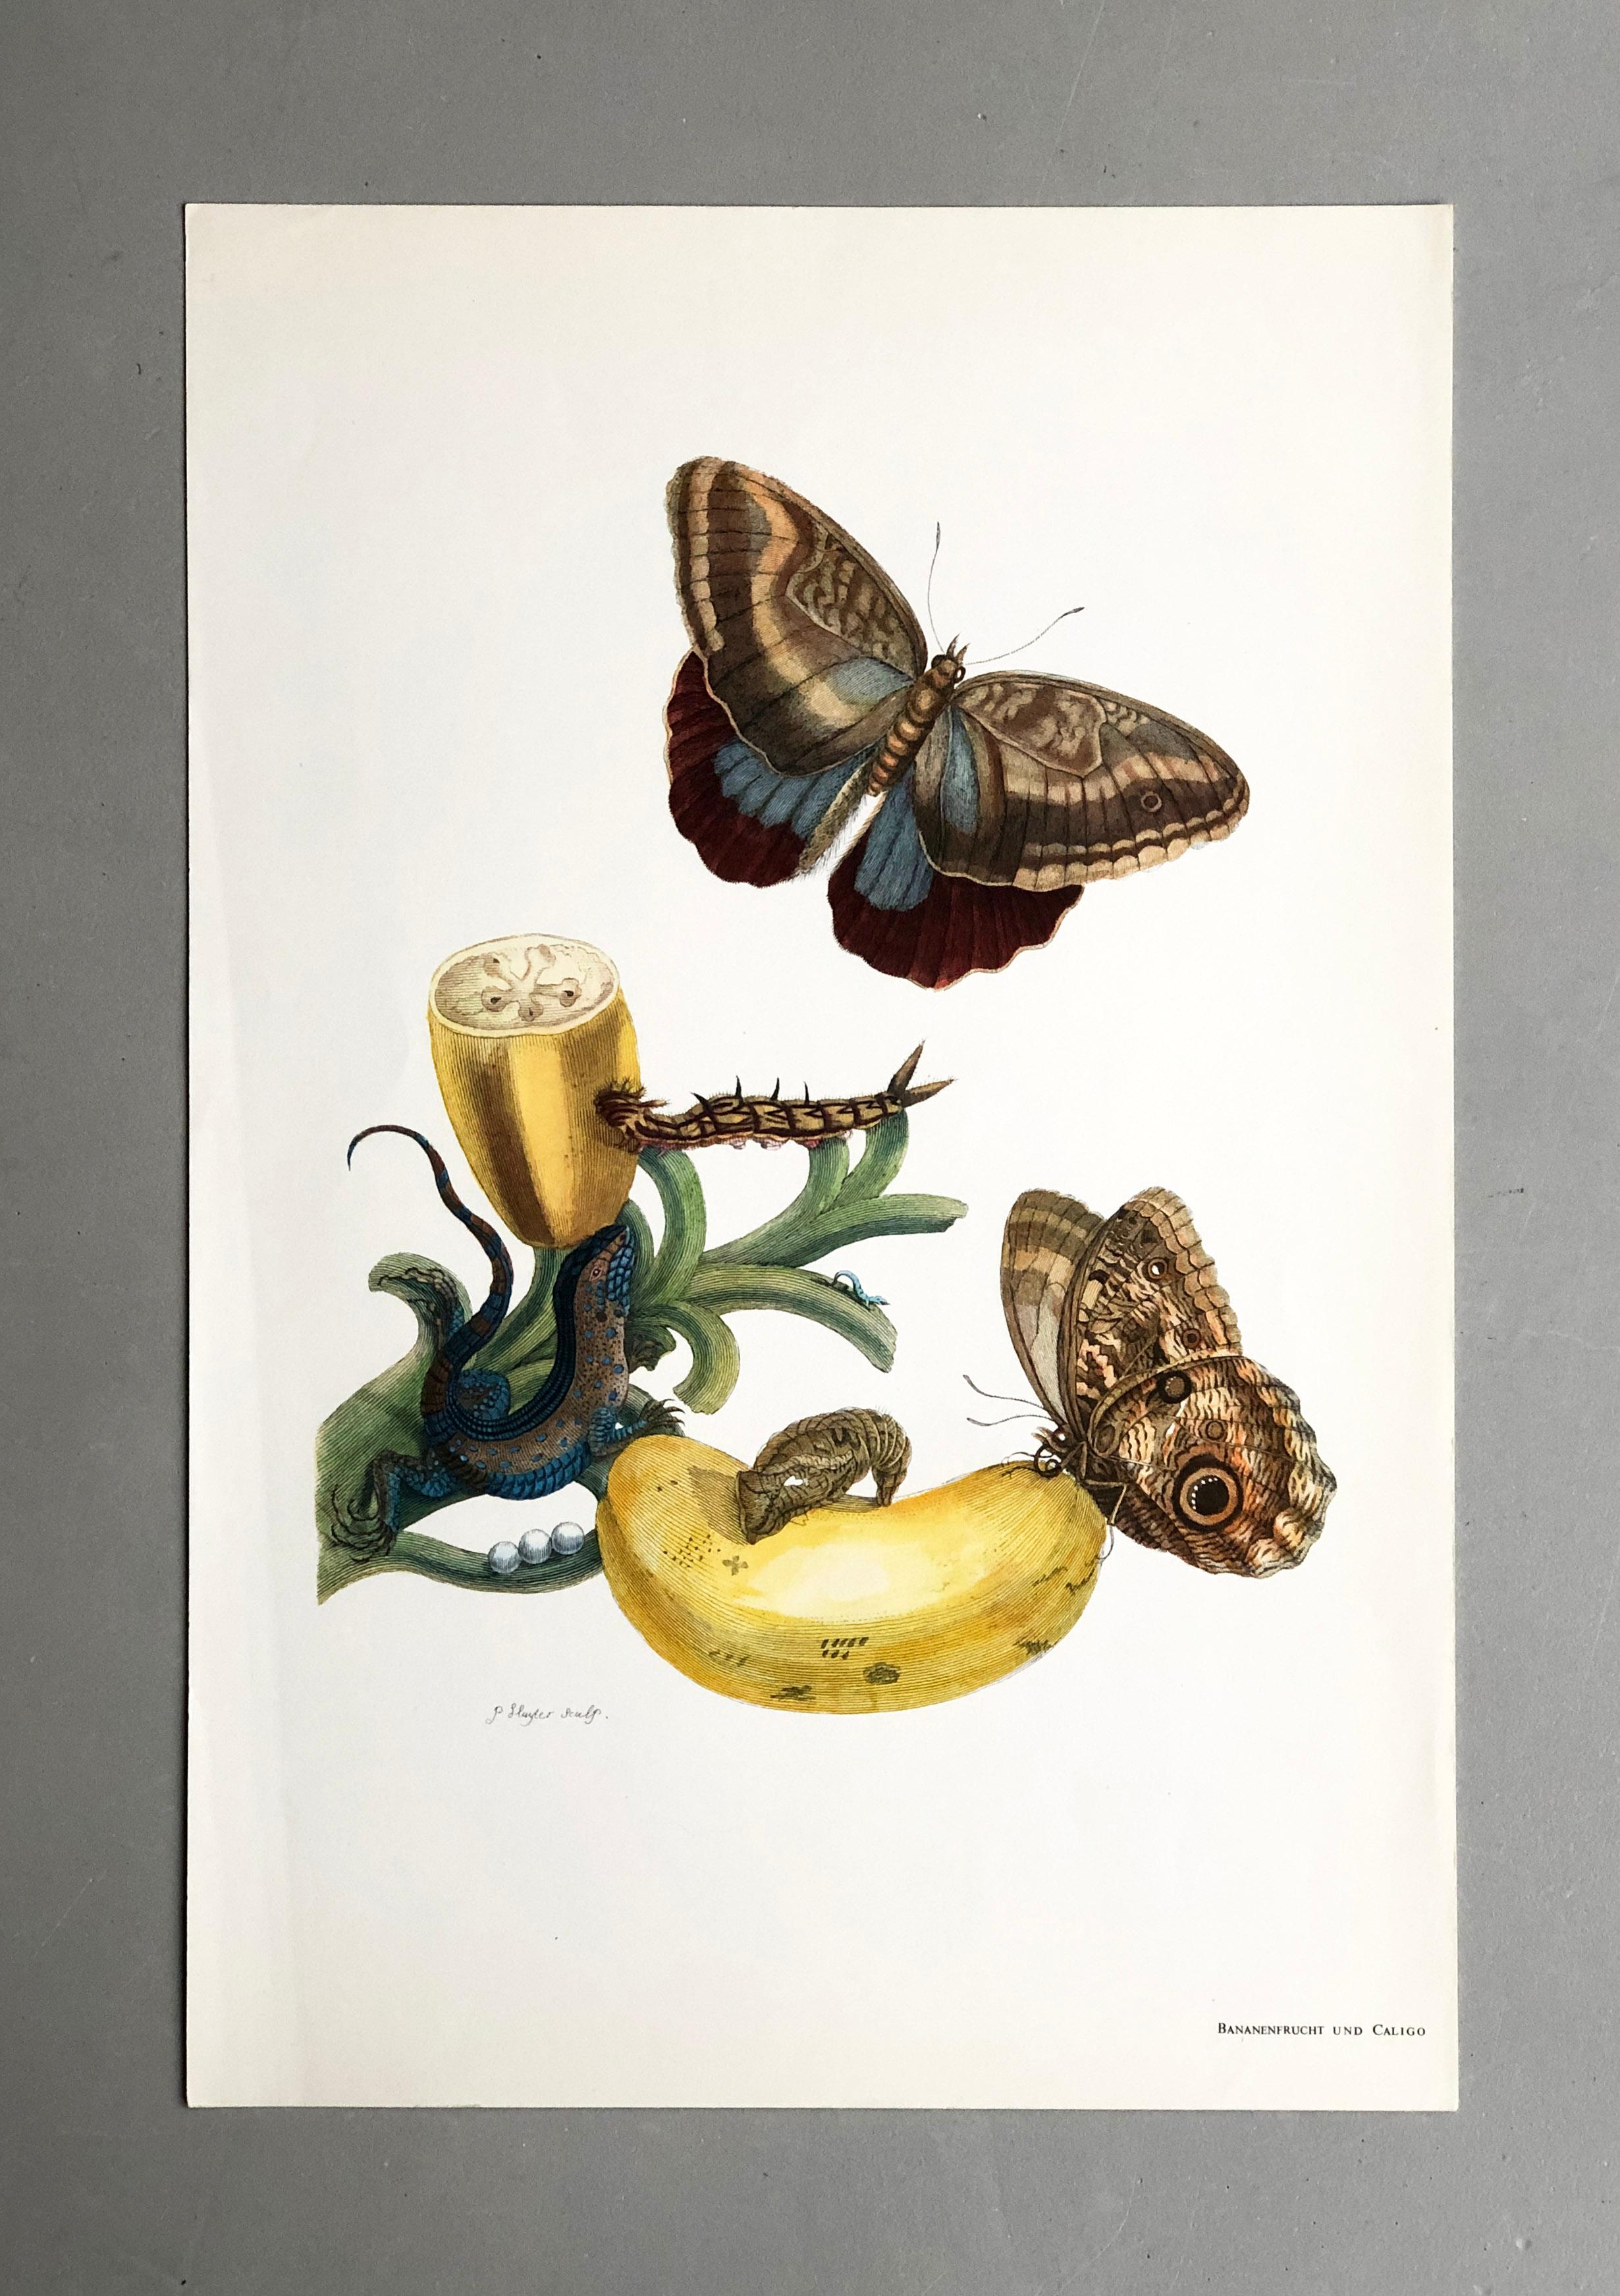 Maria Sibylla Merian - P. Sluyter - Banana fruit and Caligo Nr. 23 For Sale 1